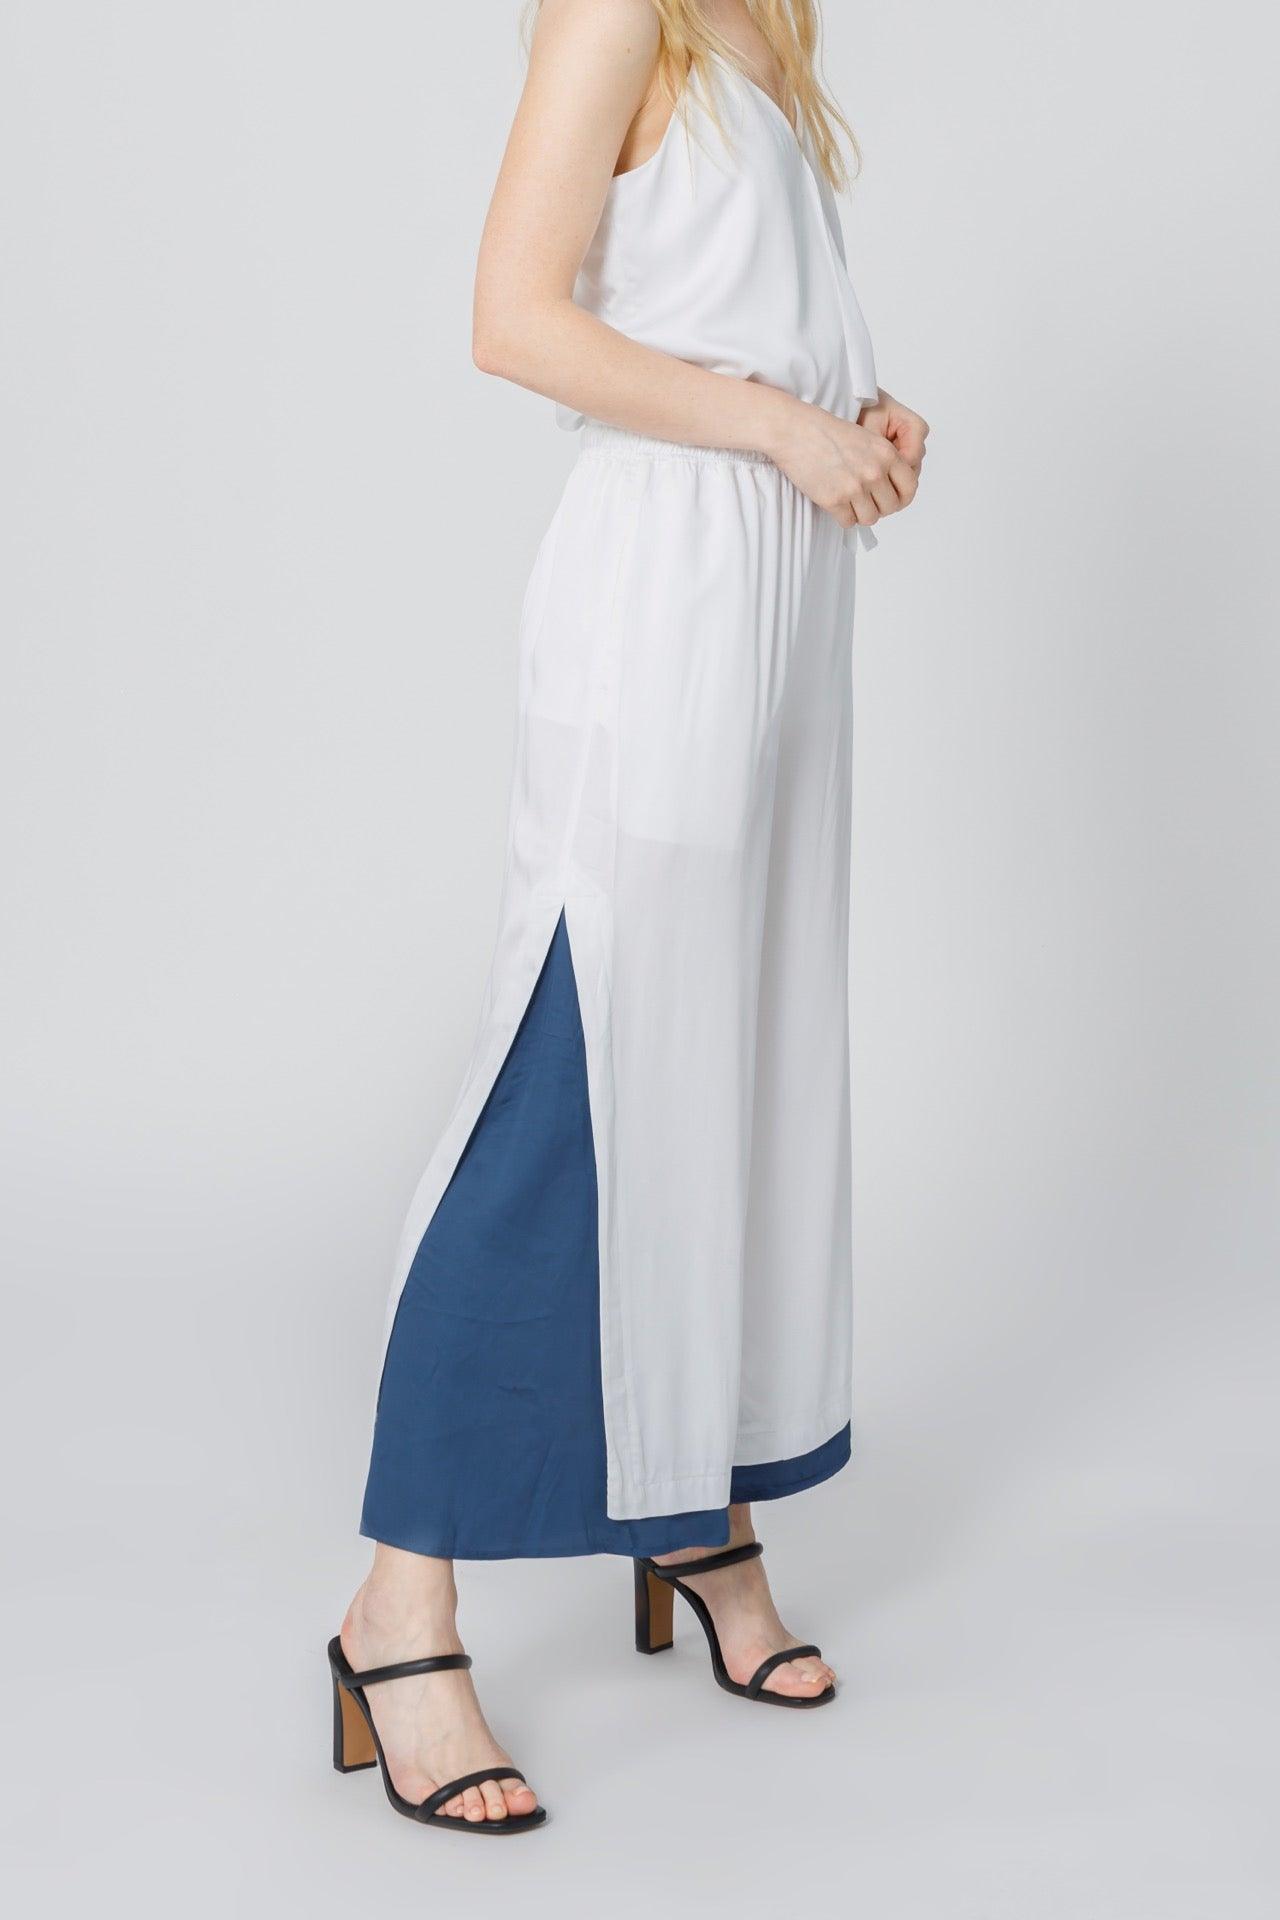 Women&#39;s Color Block Asymmetric Wide Pants - NOT LABELED